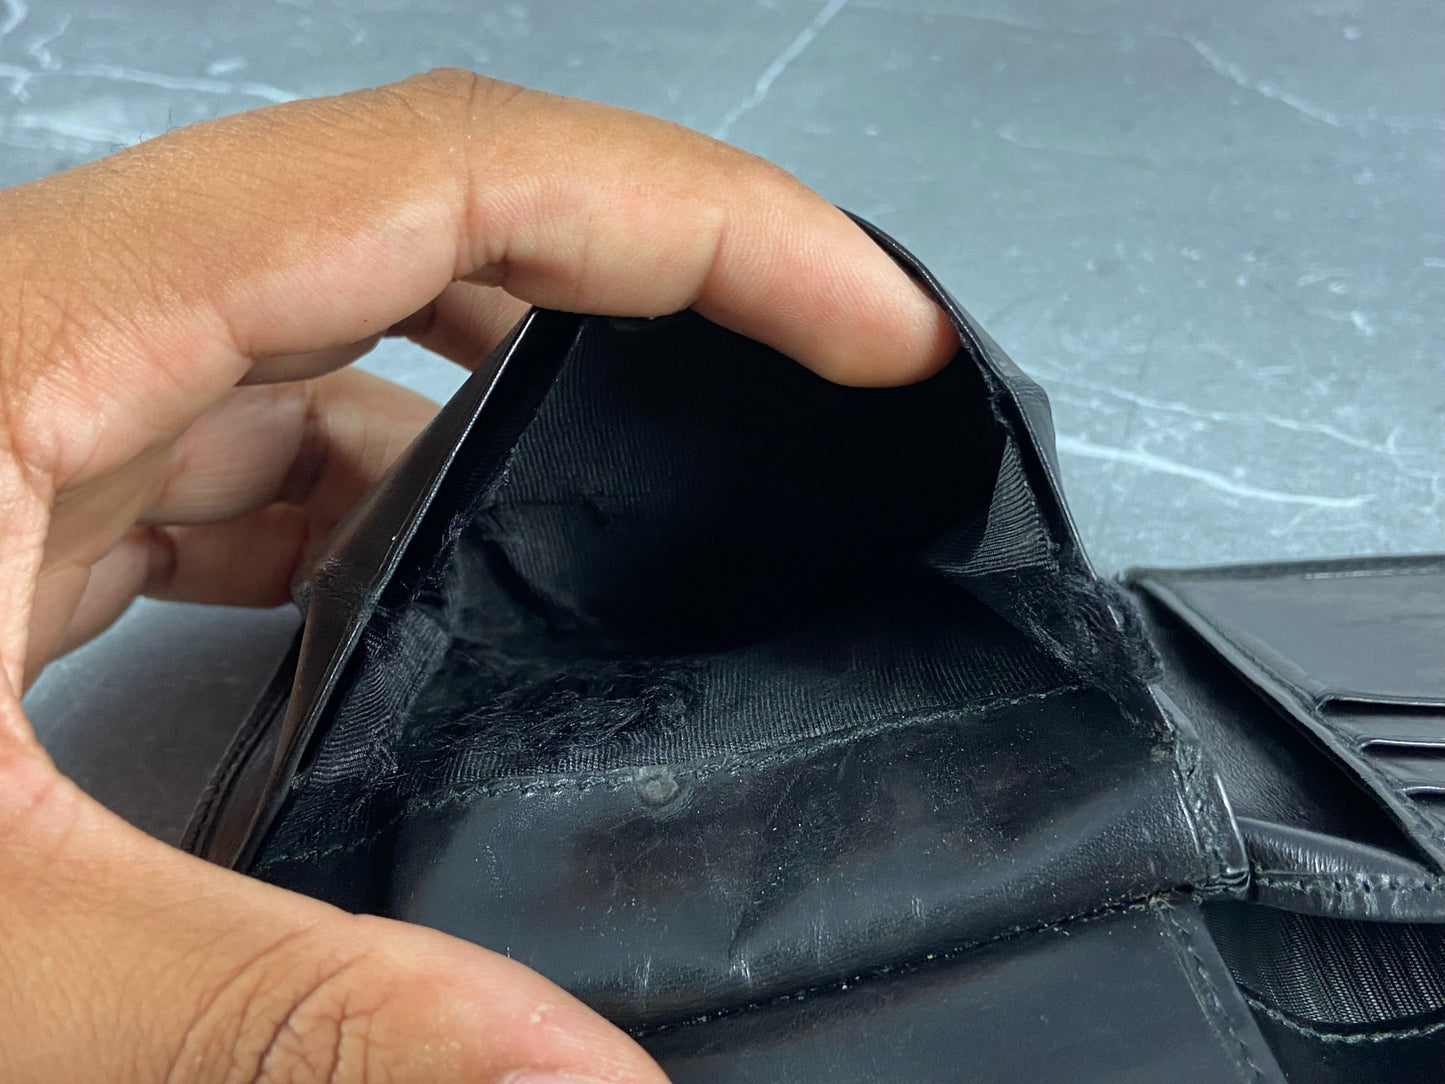 Prada Leather Bifold Wallet Black